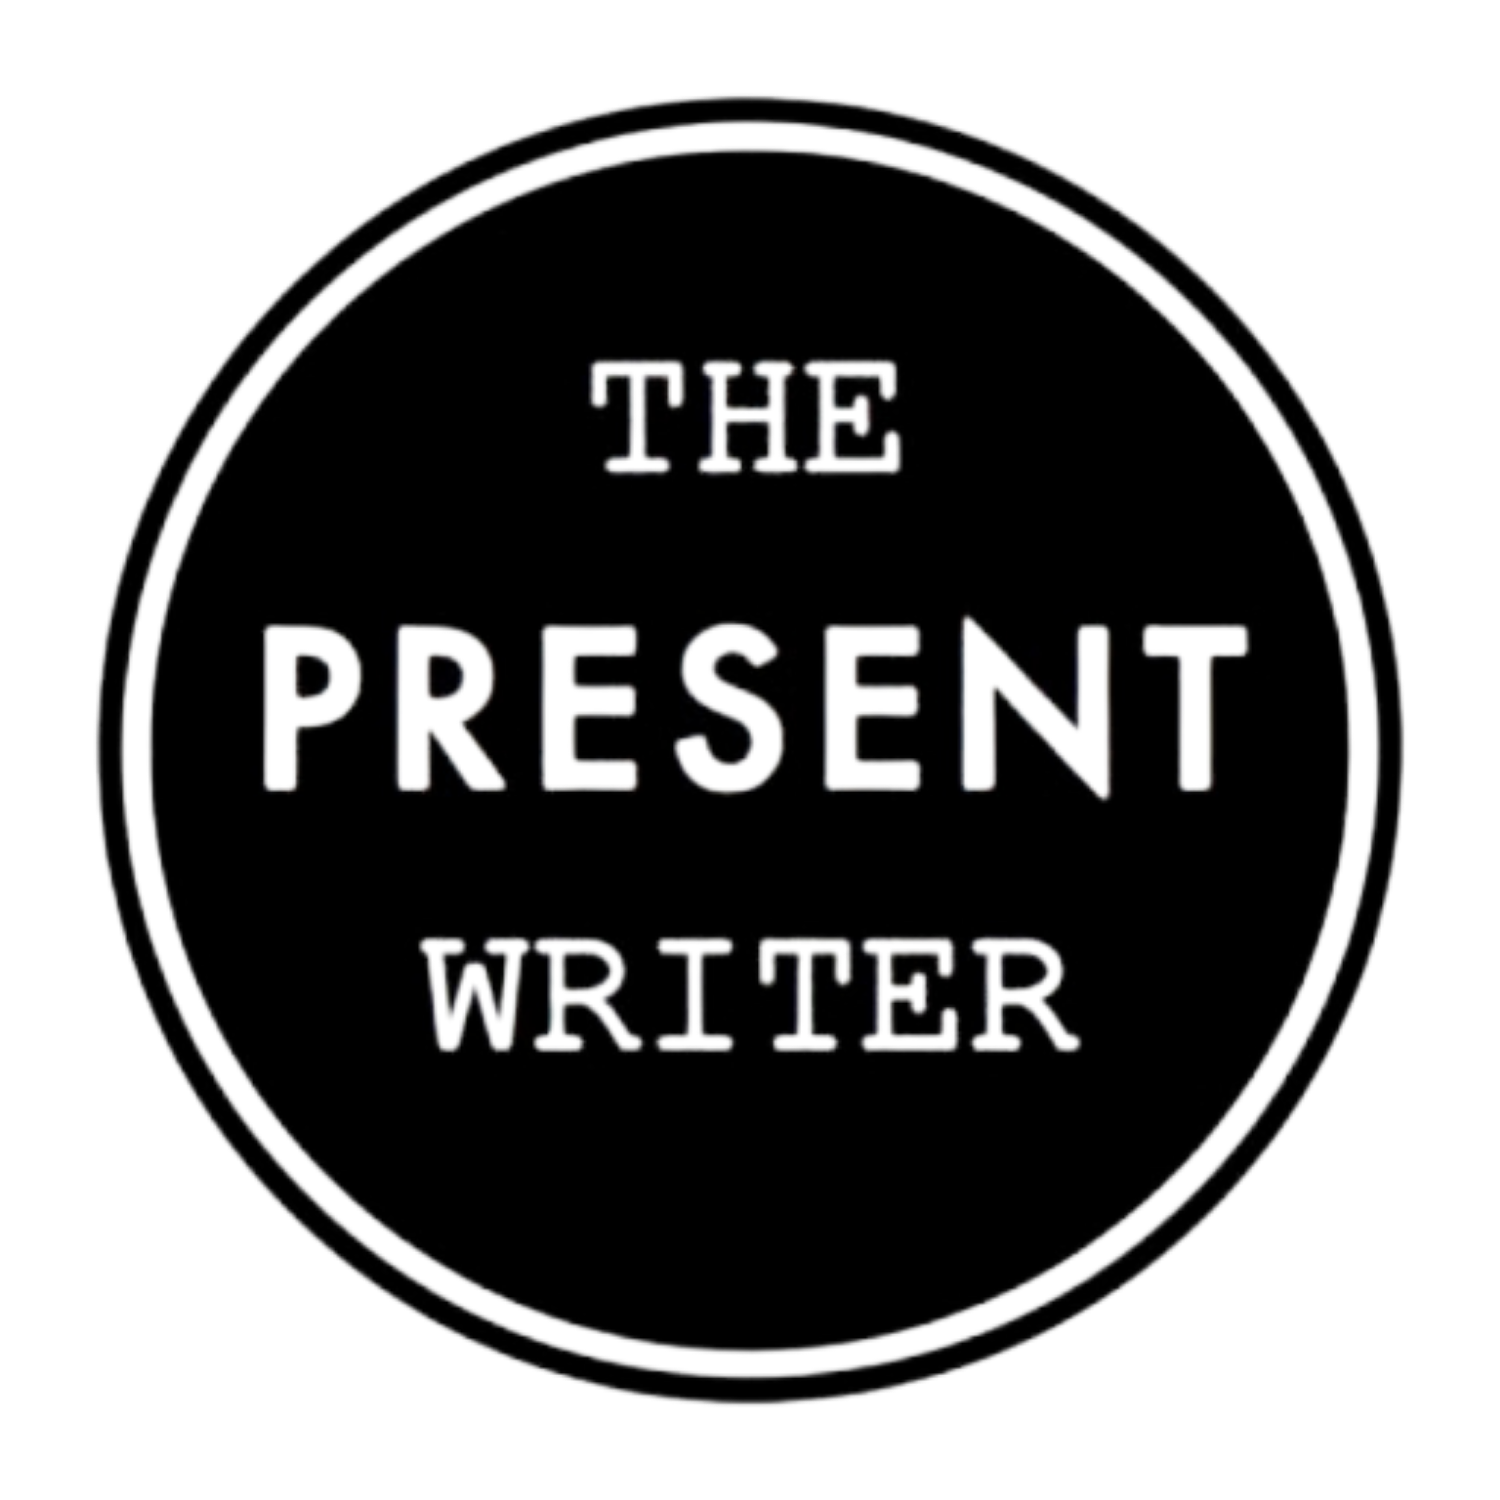 The Present Writer